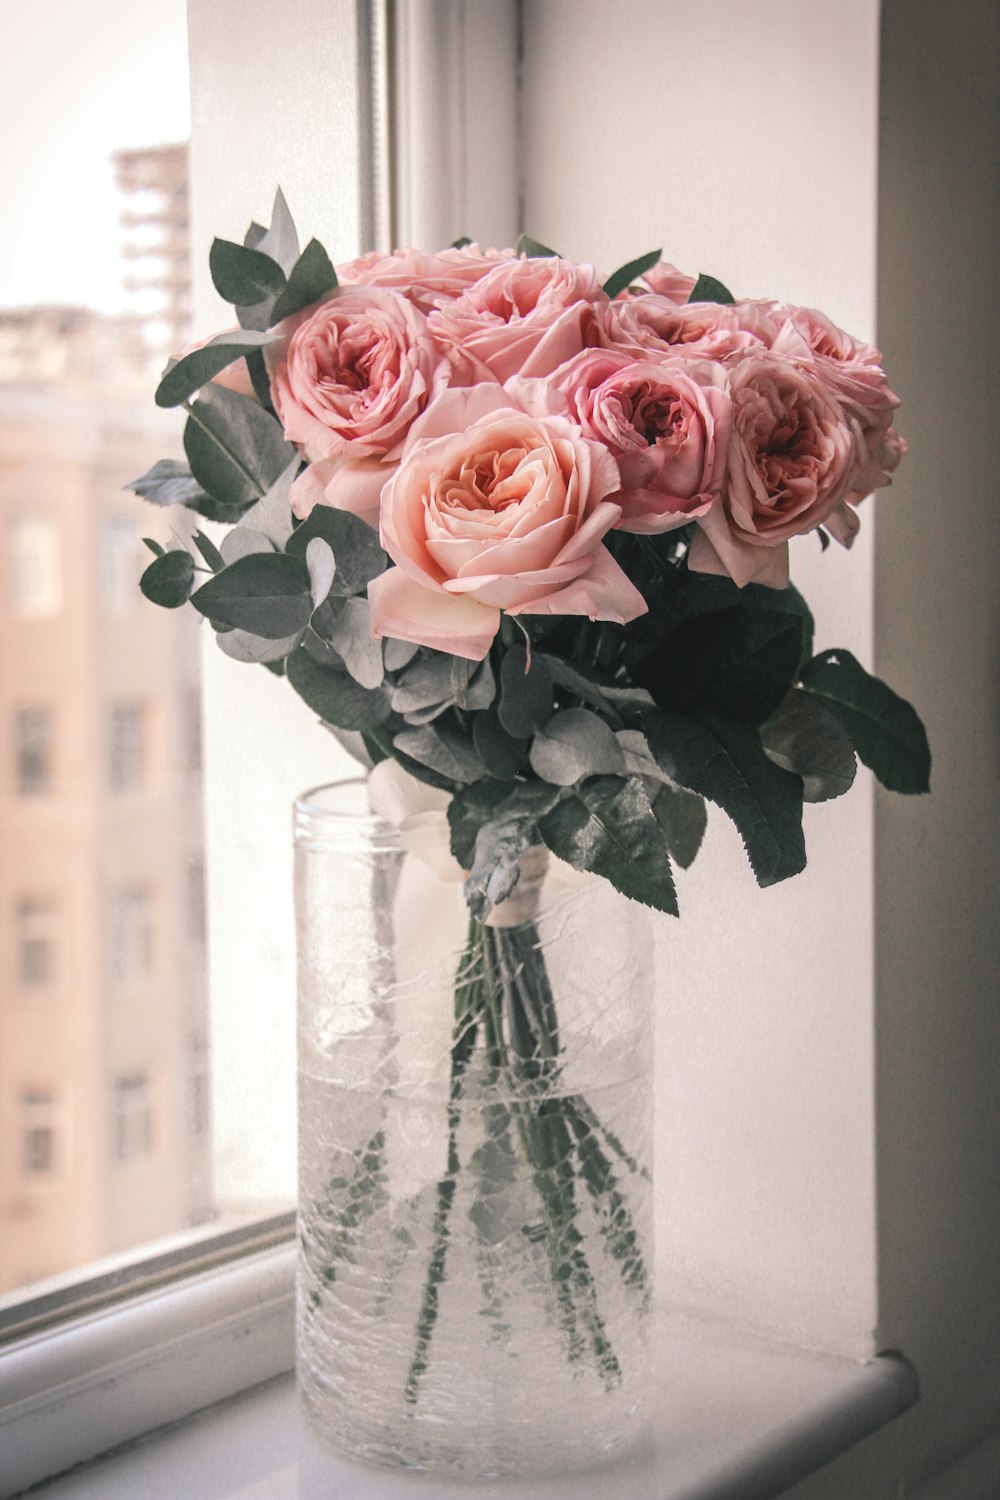 rose rosa in vaso di vetro trasparente